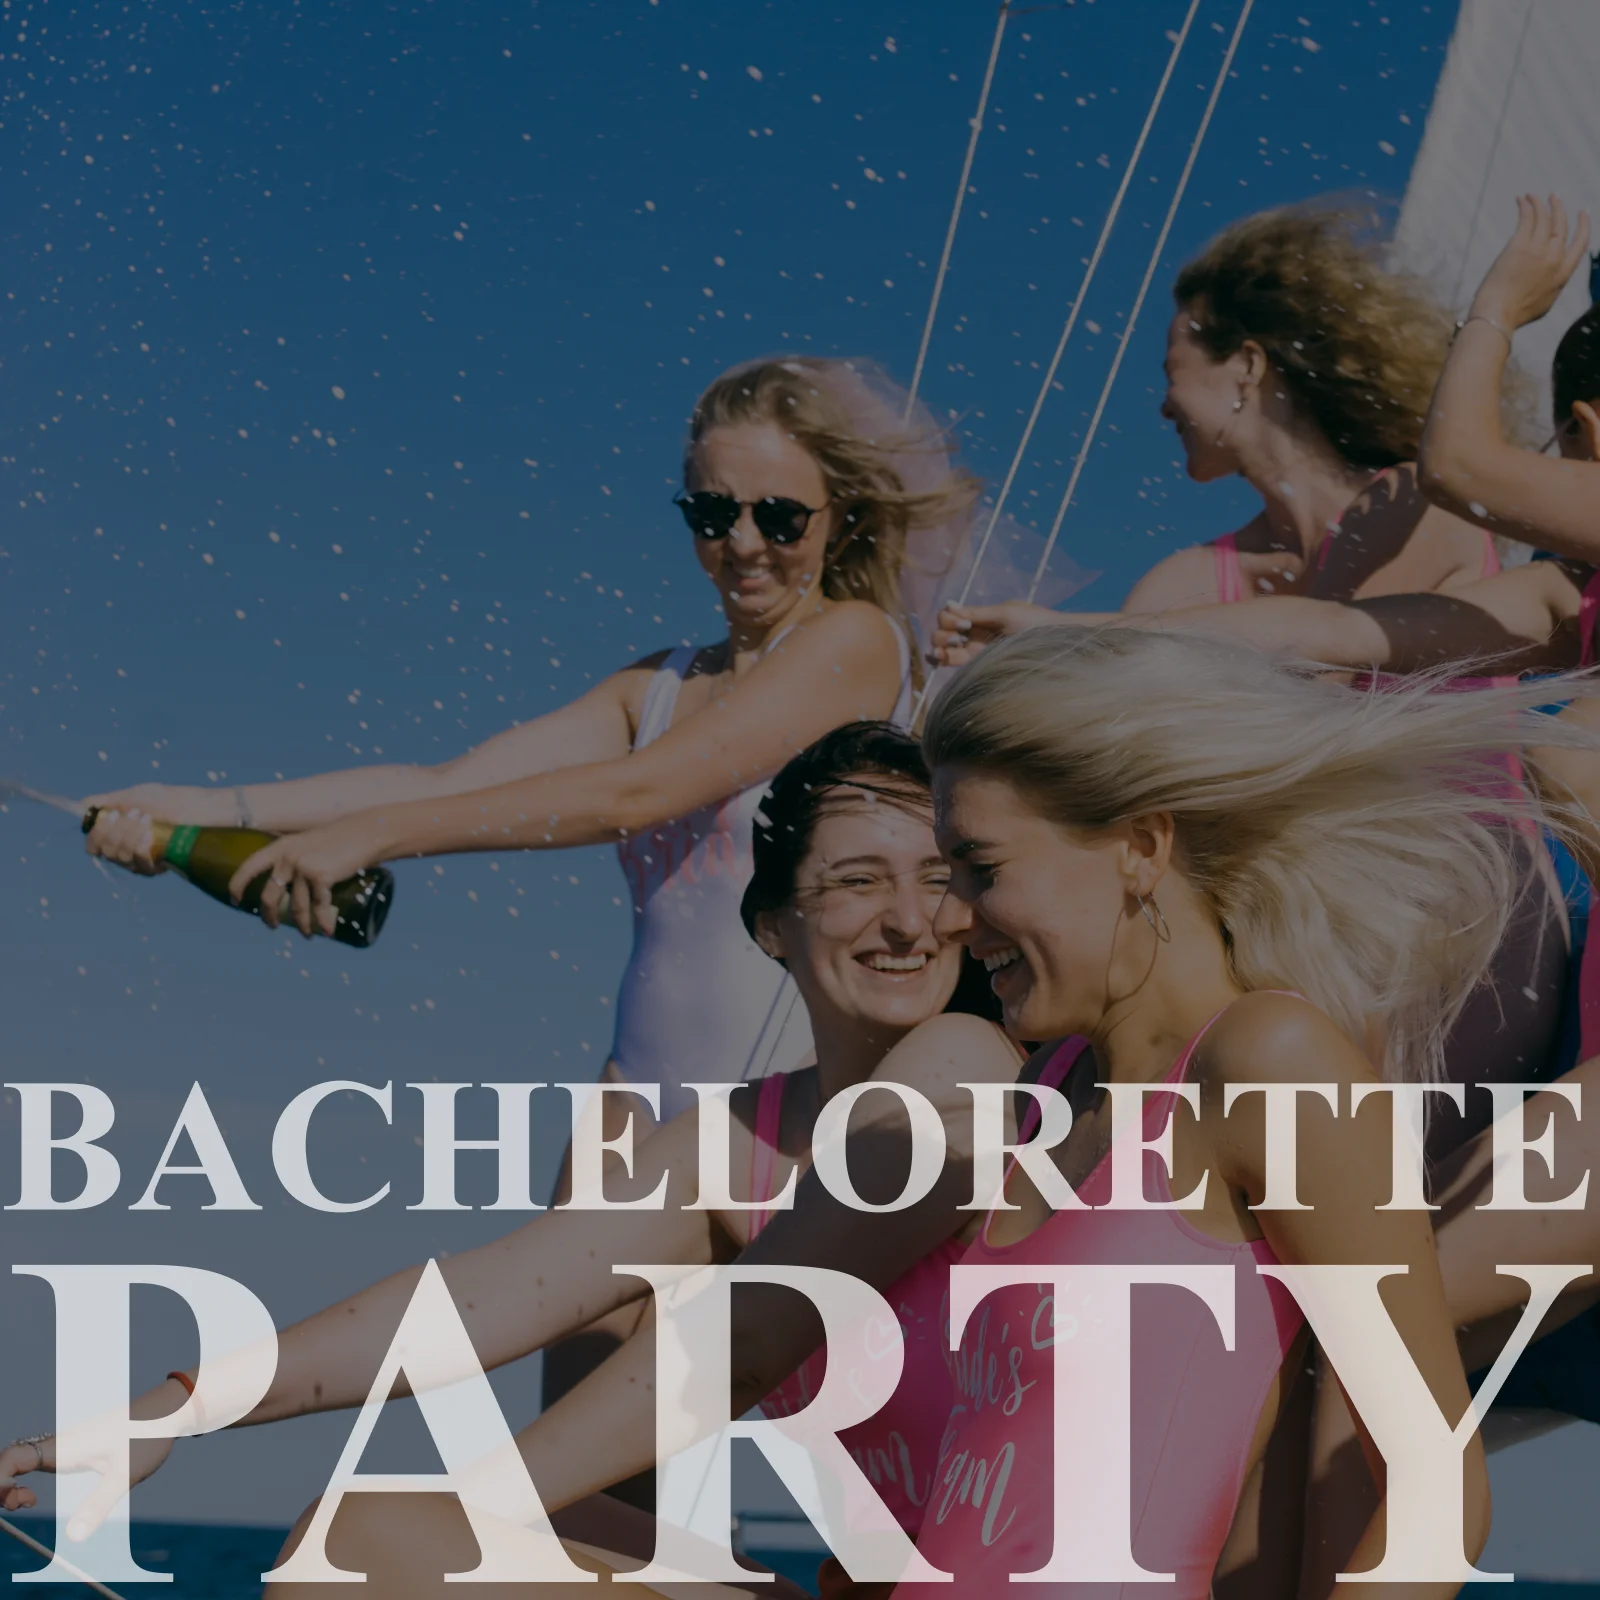 Bachelorette party on a yacht